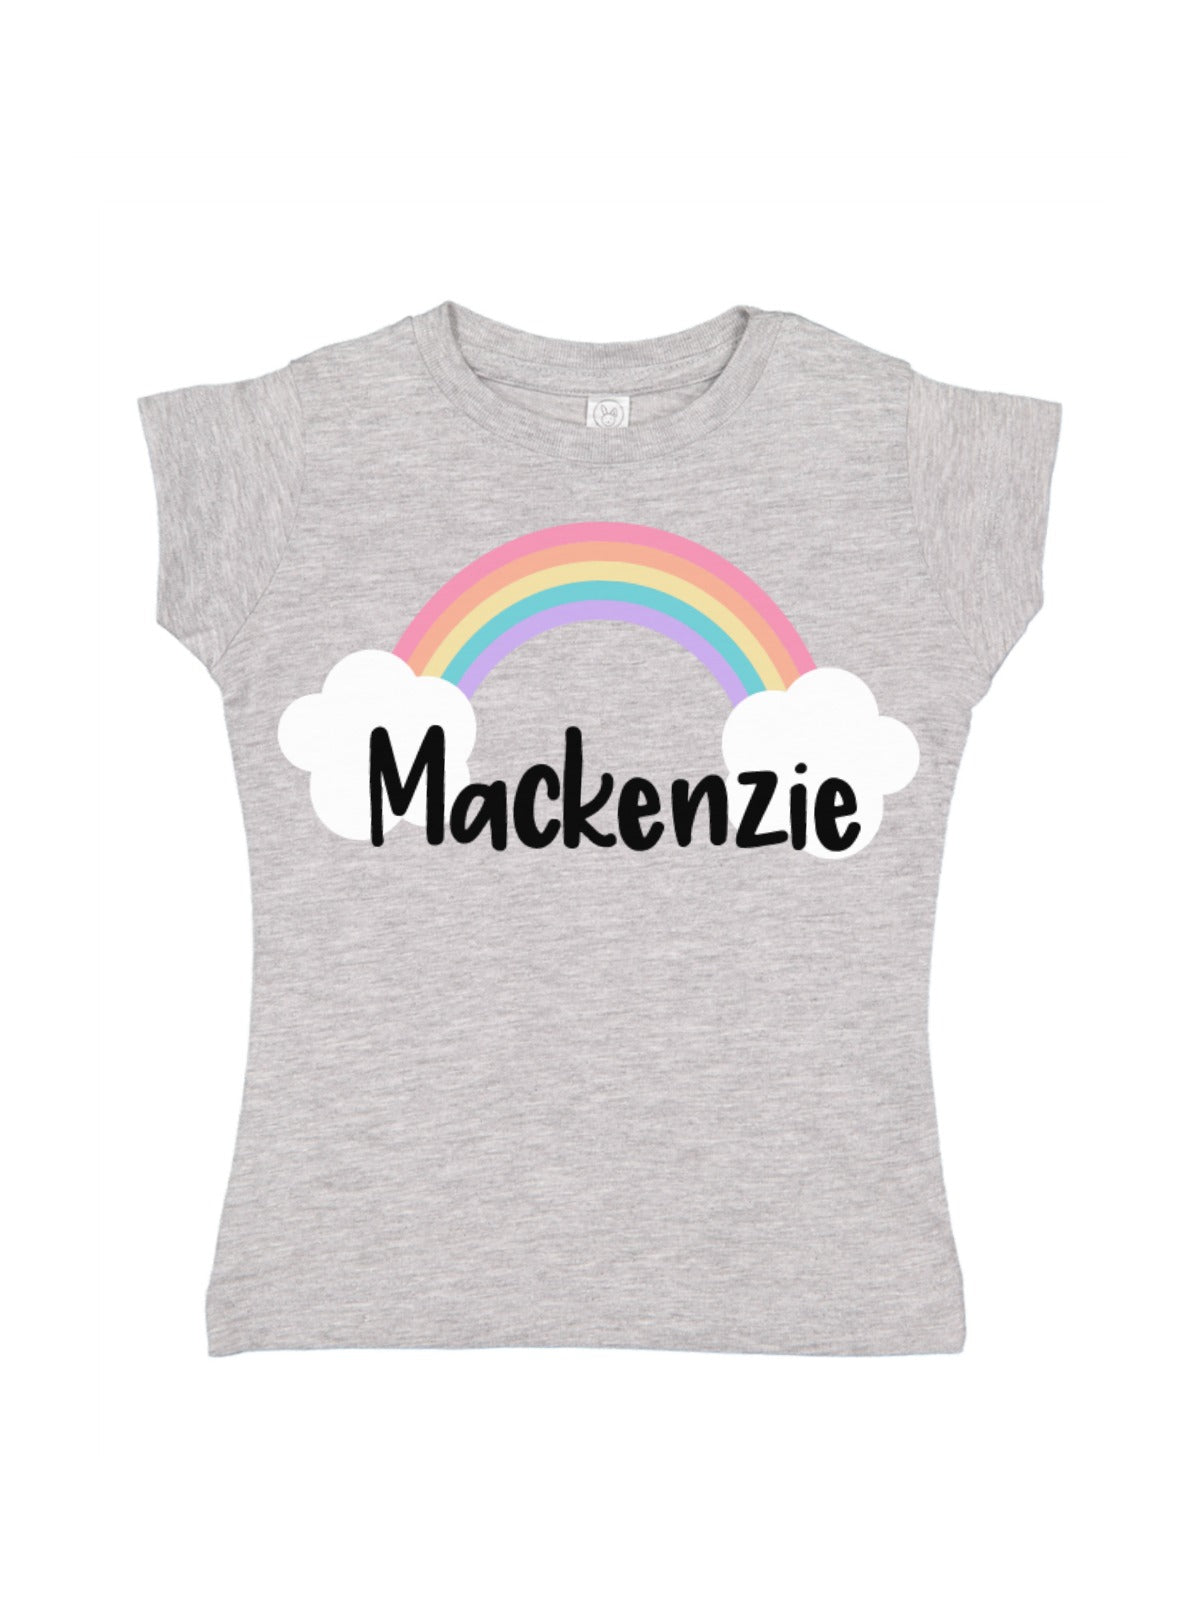 Personalized Heather Gray Rainbow T-Shirt